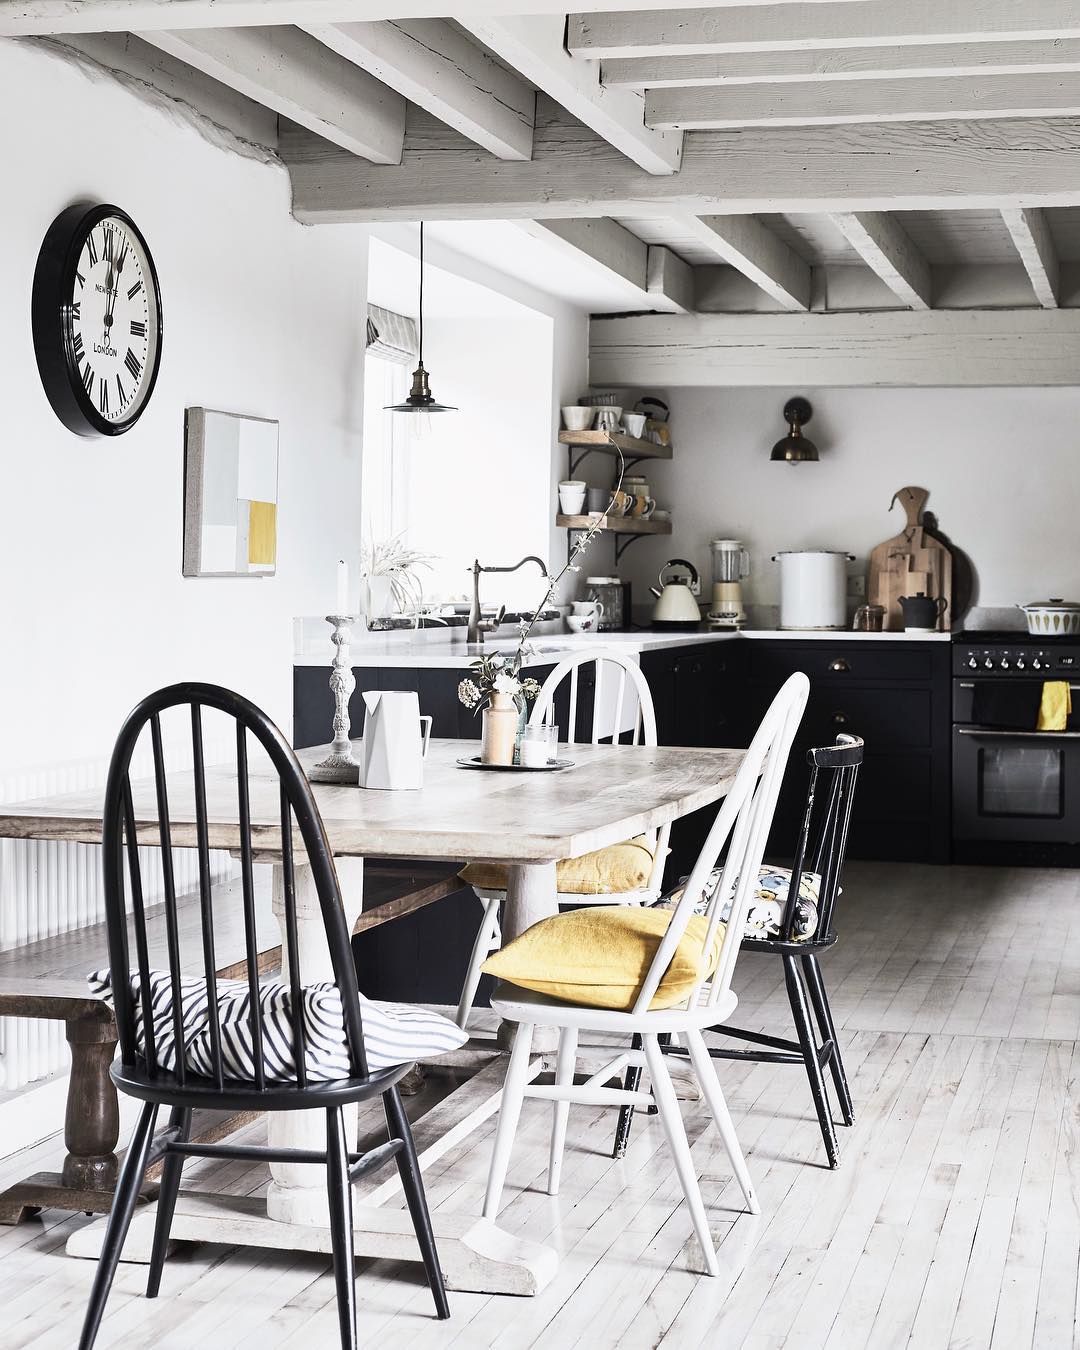 Shabby chic, coastal inspired kitchen interior